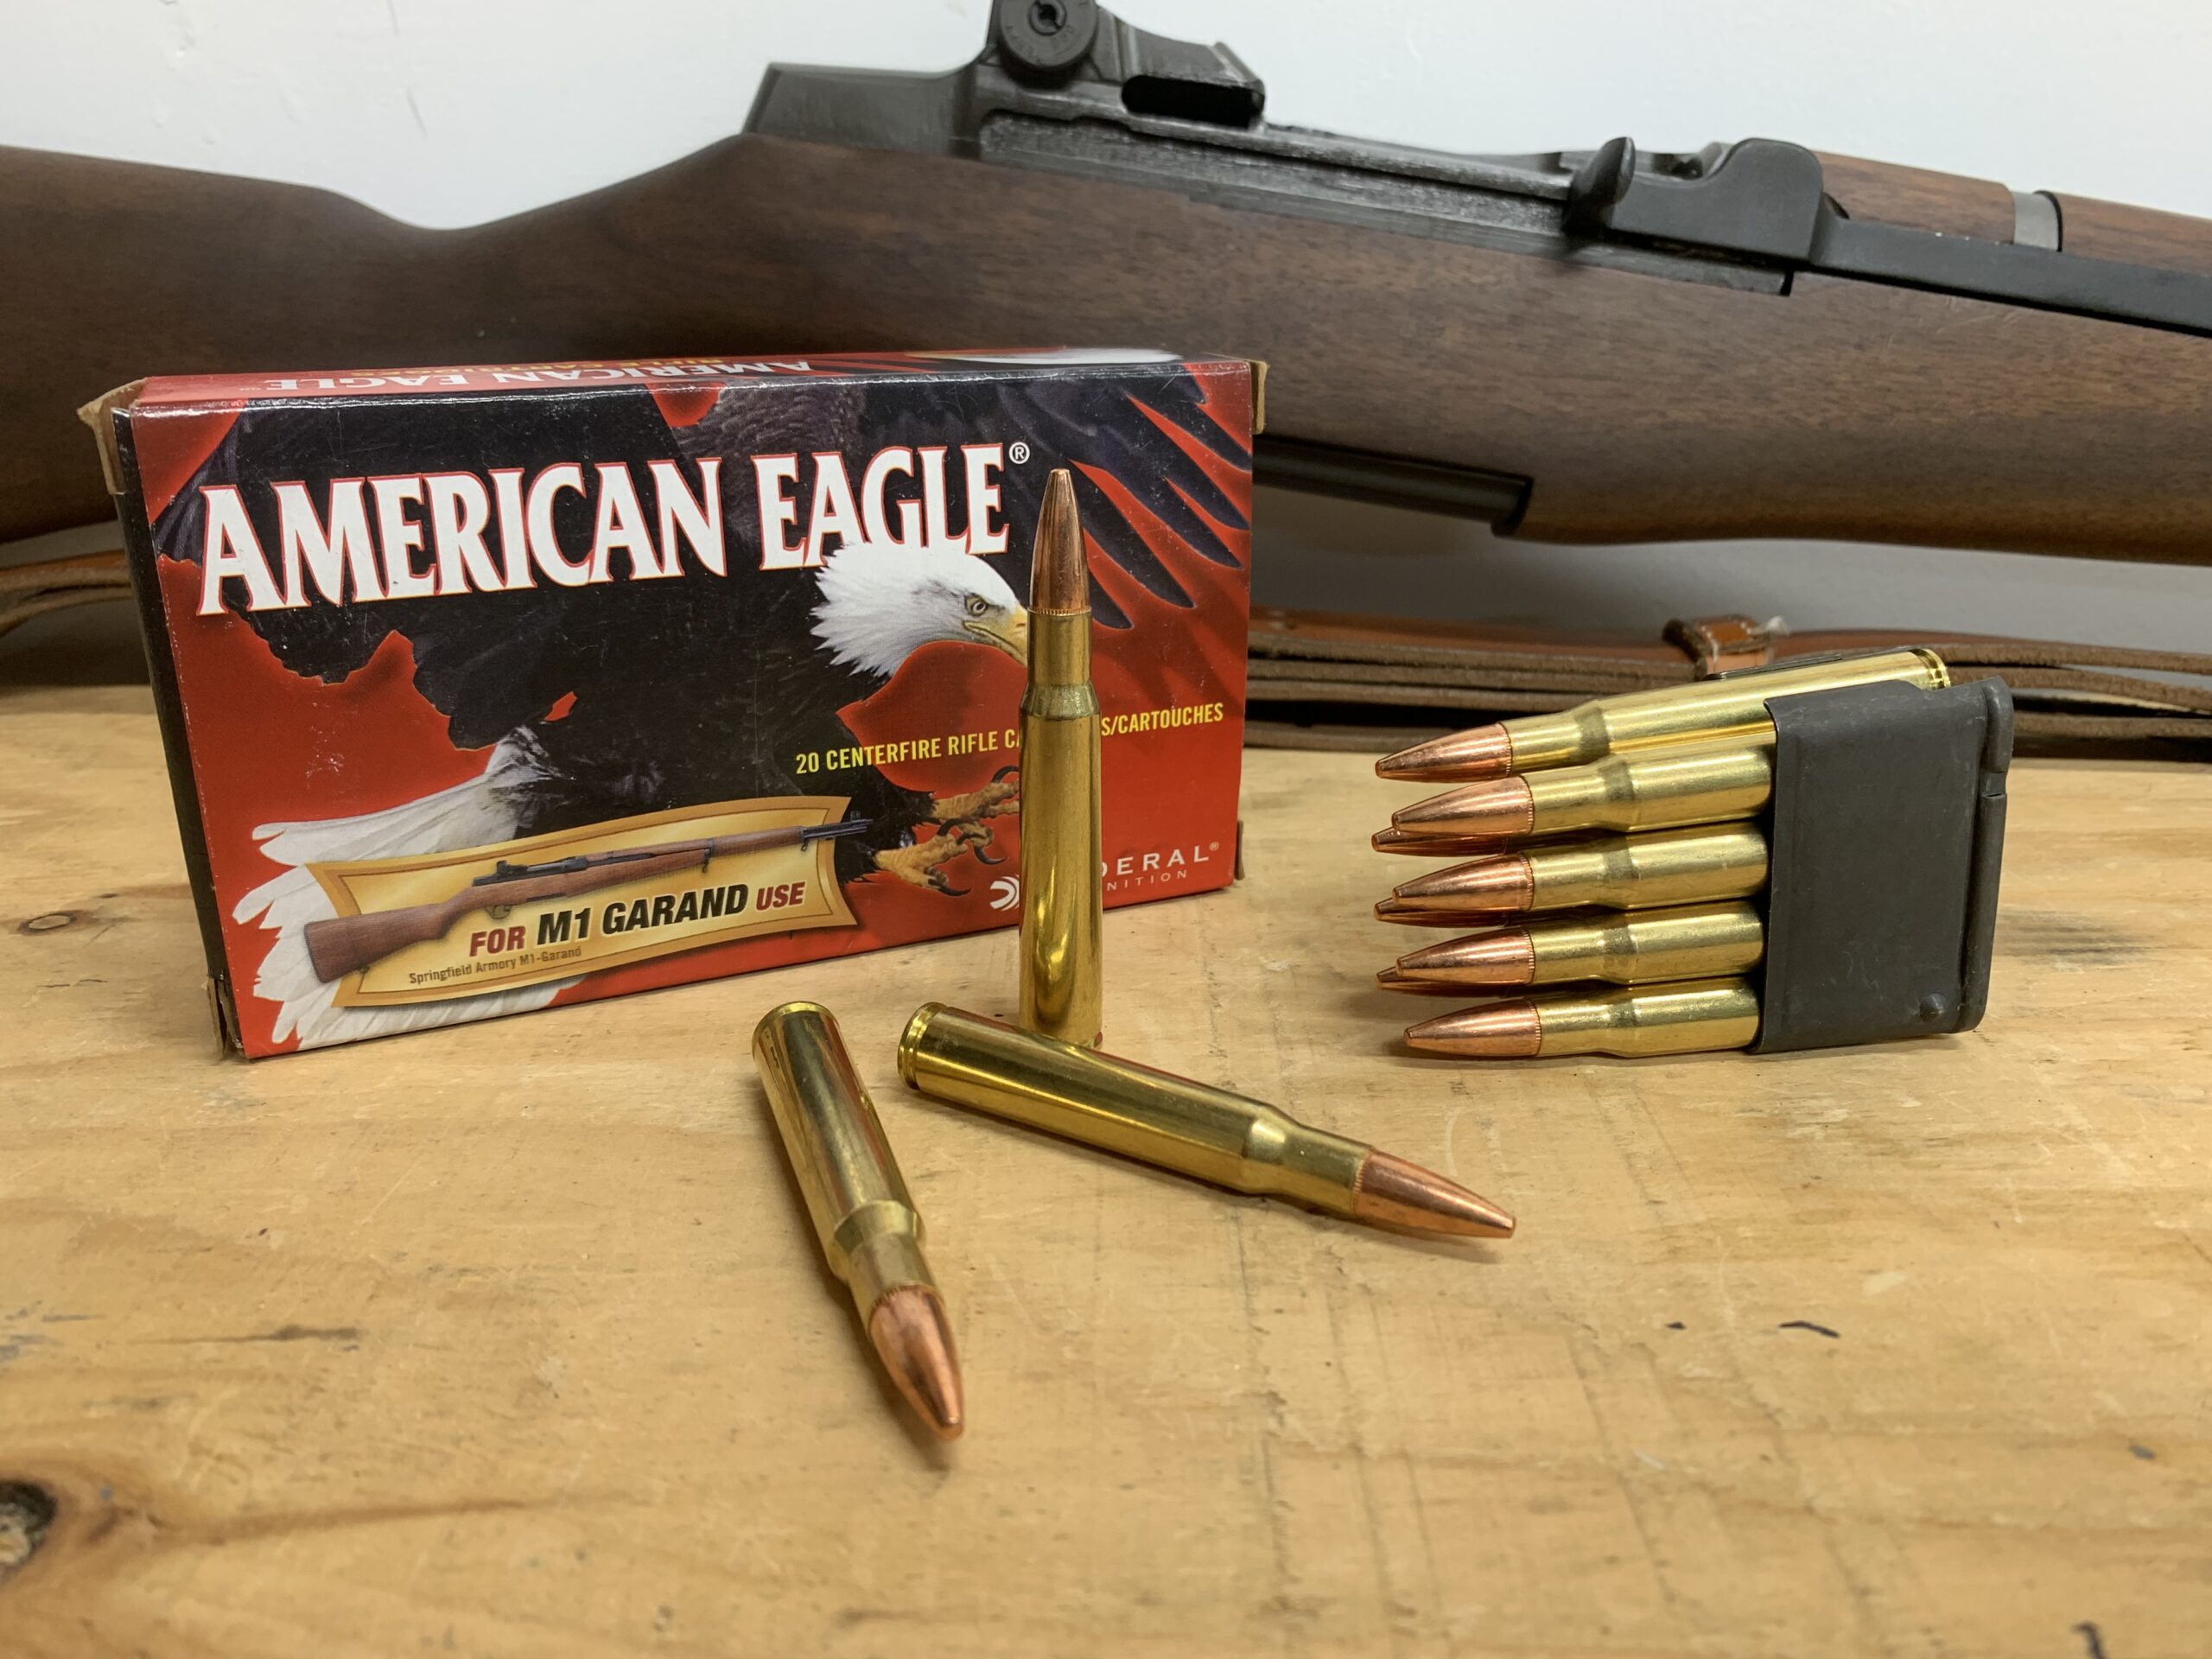 American Eagle 150-grain ammo for the M1 Garand